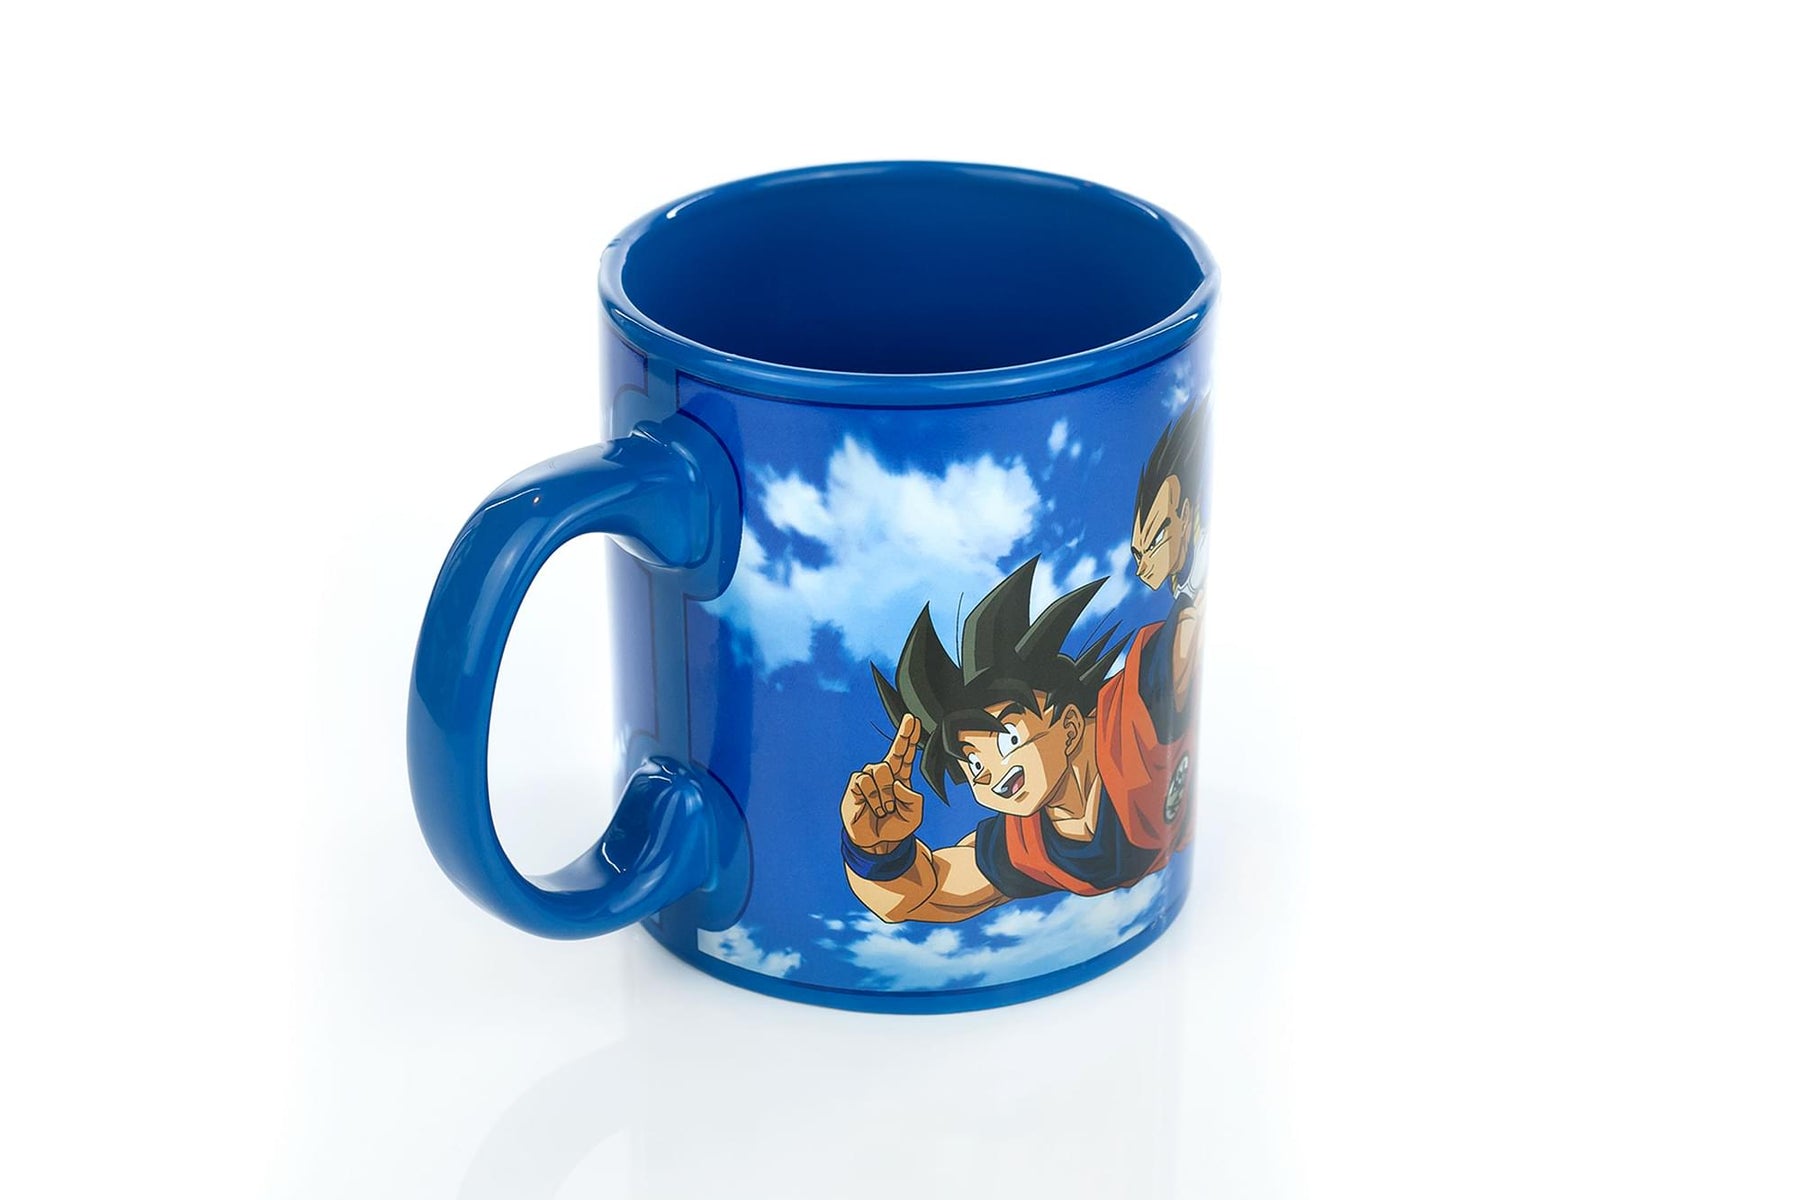 Dragon Ball Super 16-Oz Ceramic Character Mug | Blue